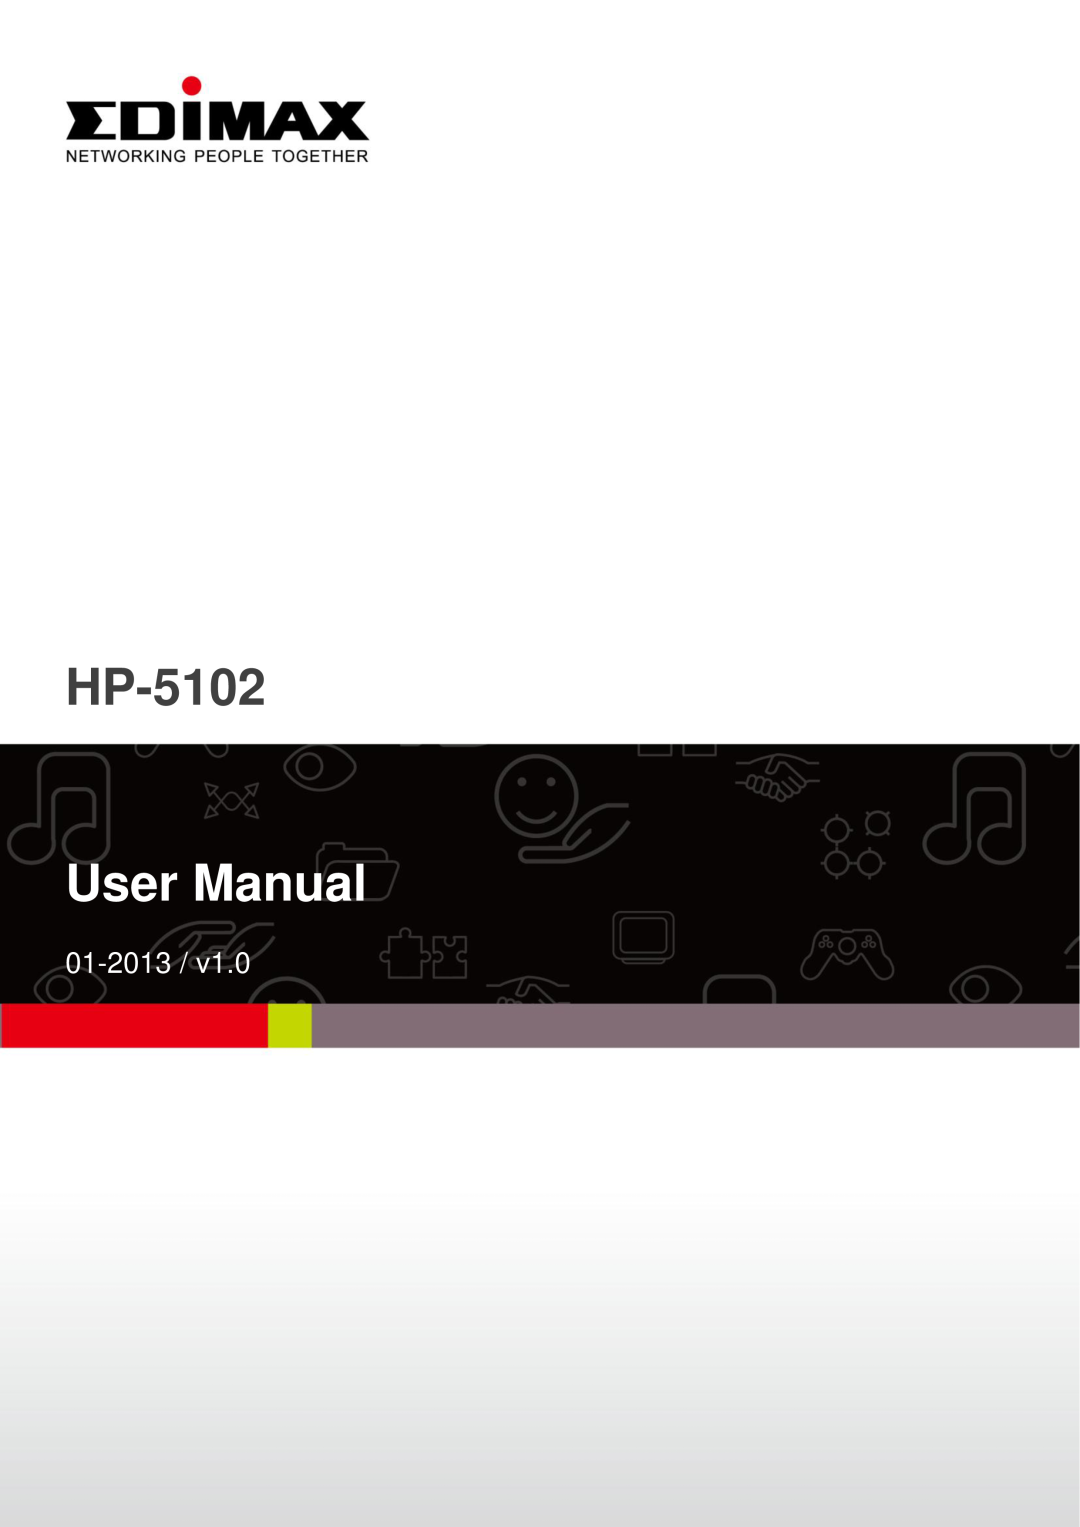 Edimax Technology HP-5102 user manual User Manual, 01-2013 